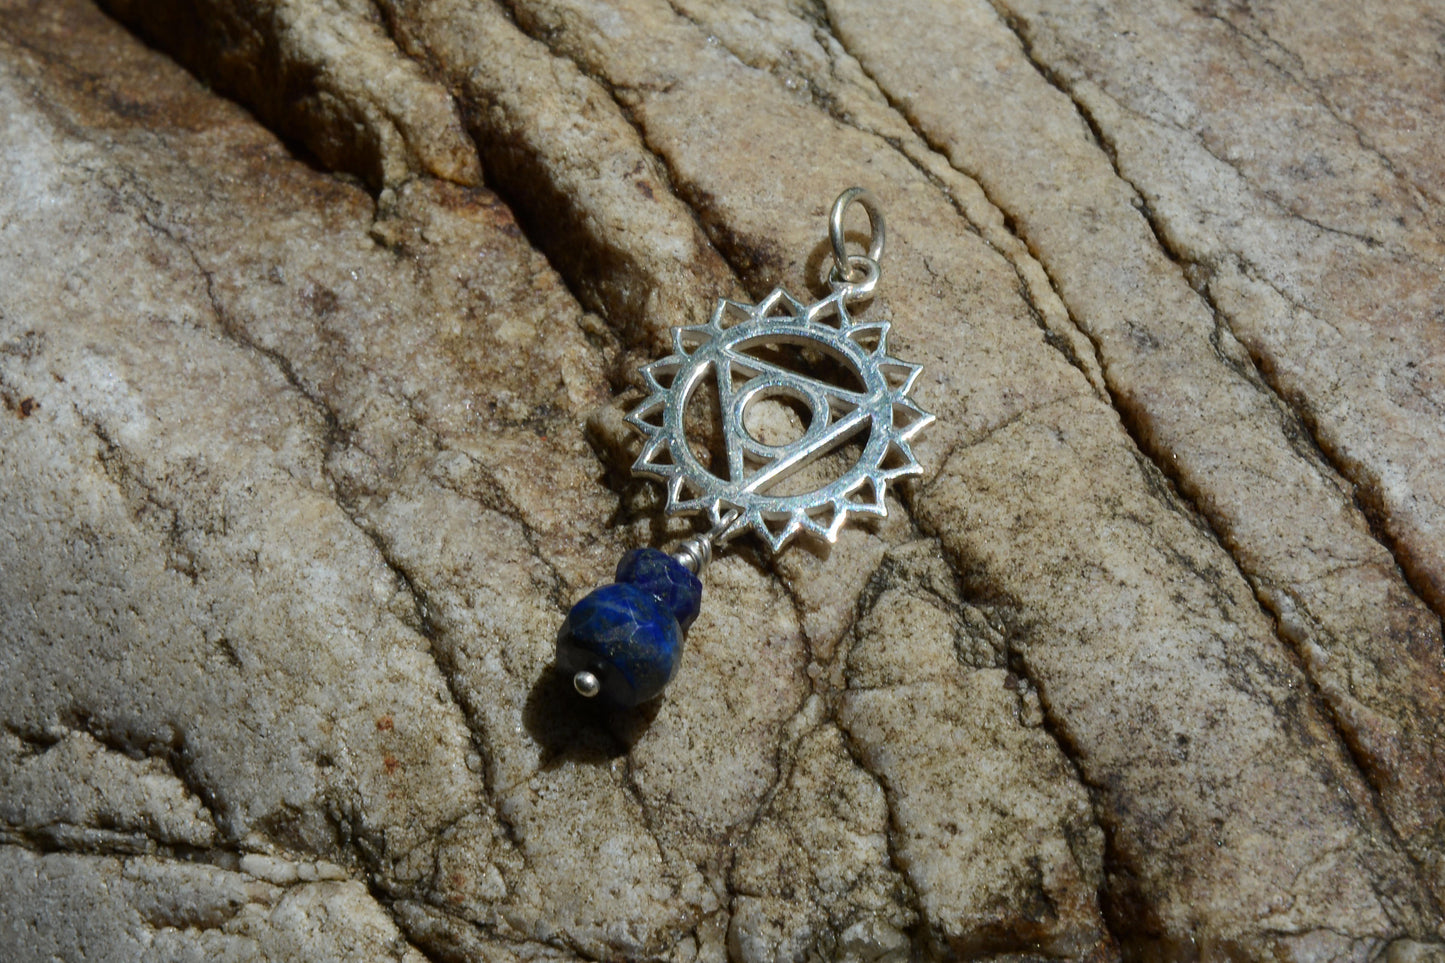 Throat Chakra Necklace with Lapis Lazuli - SaraCura Spirit